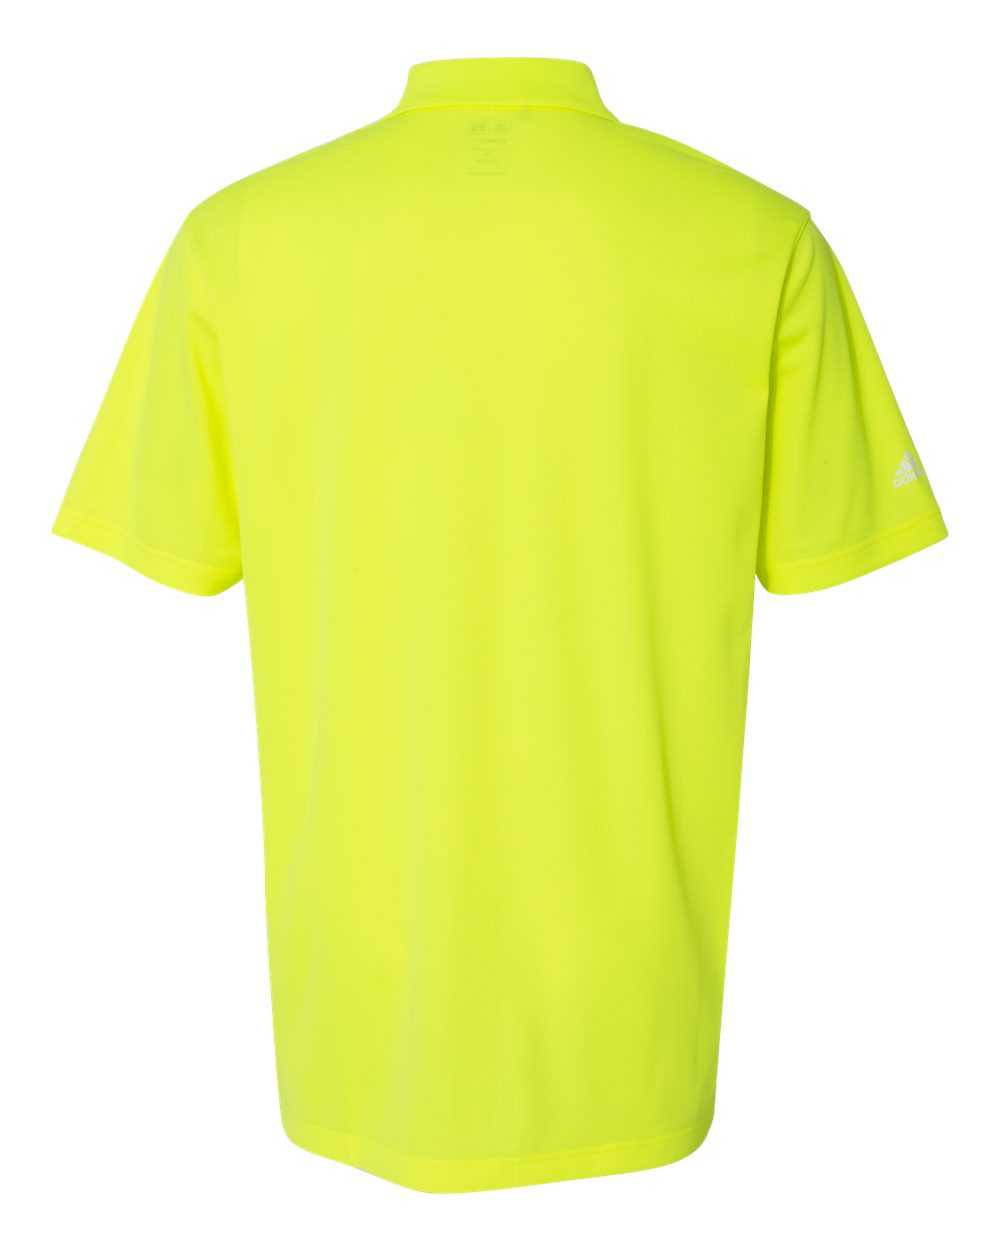 Adidas A130 Basic Sport Shirt - Solar Yellow White - HIT a Double